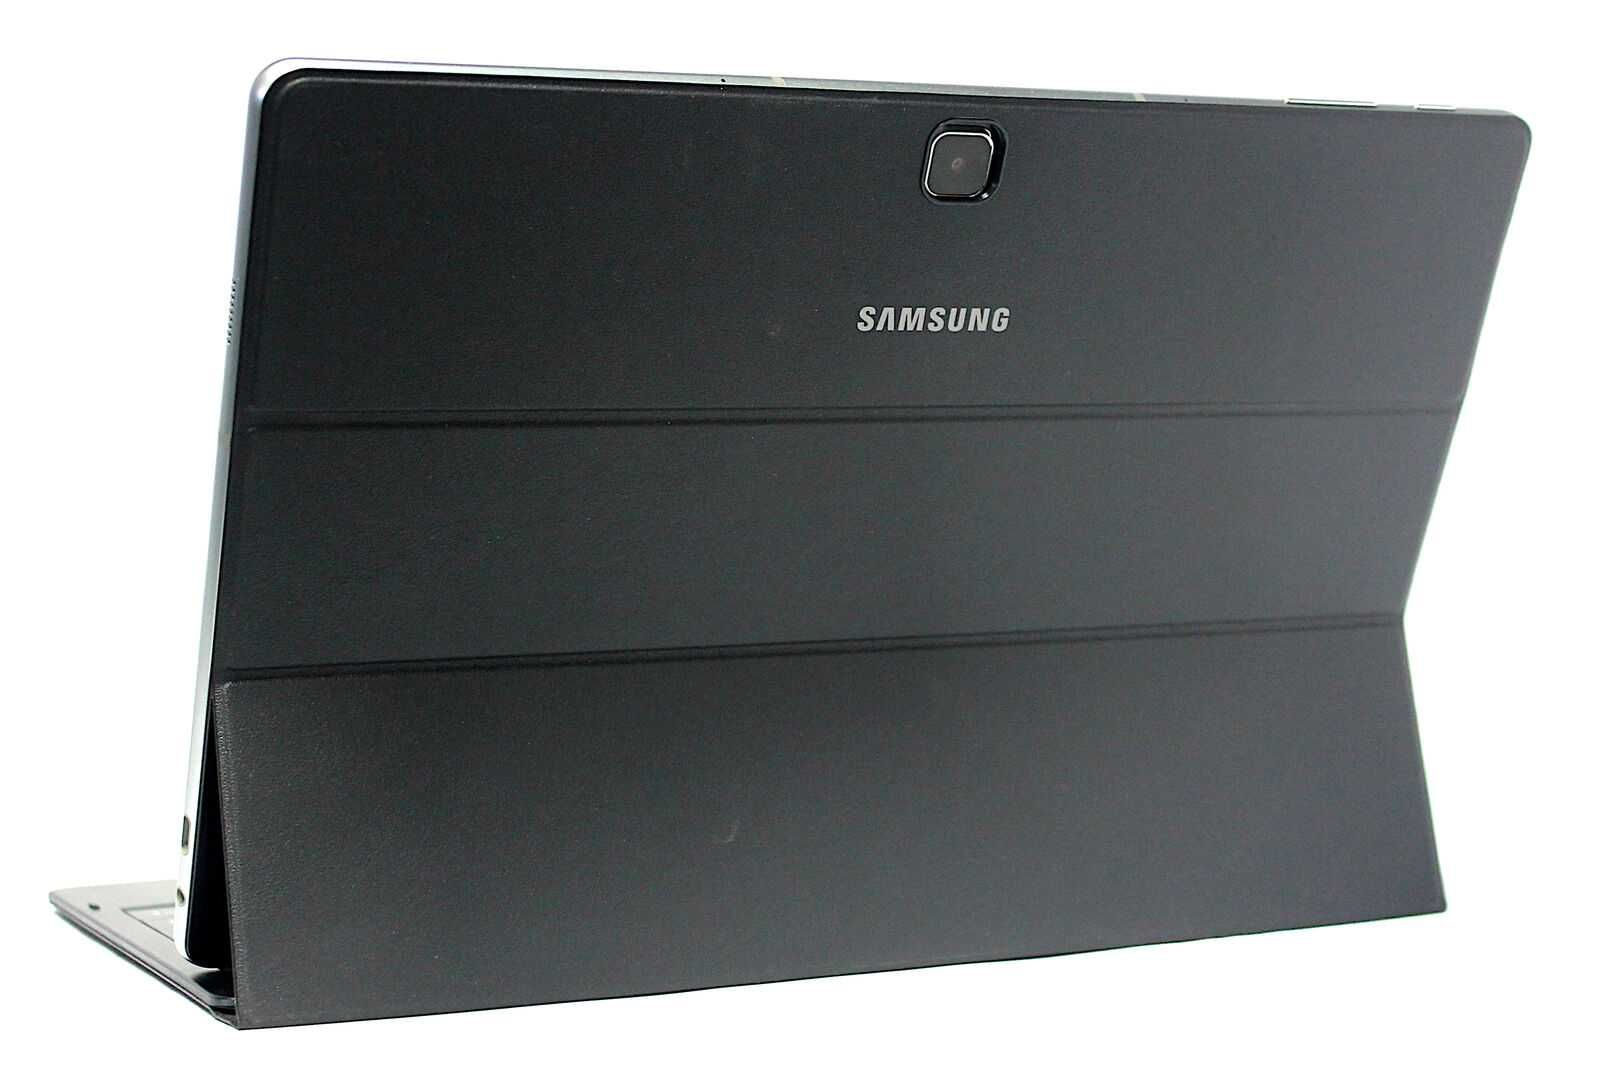 Samsung TabPro S